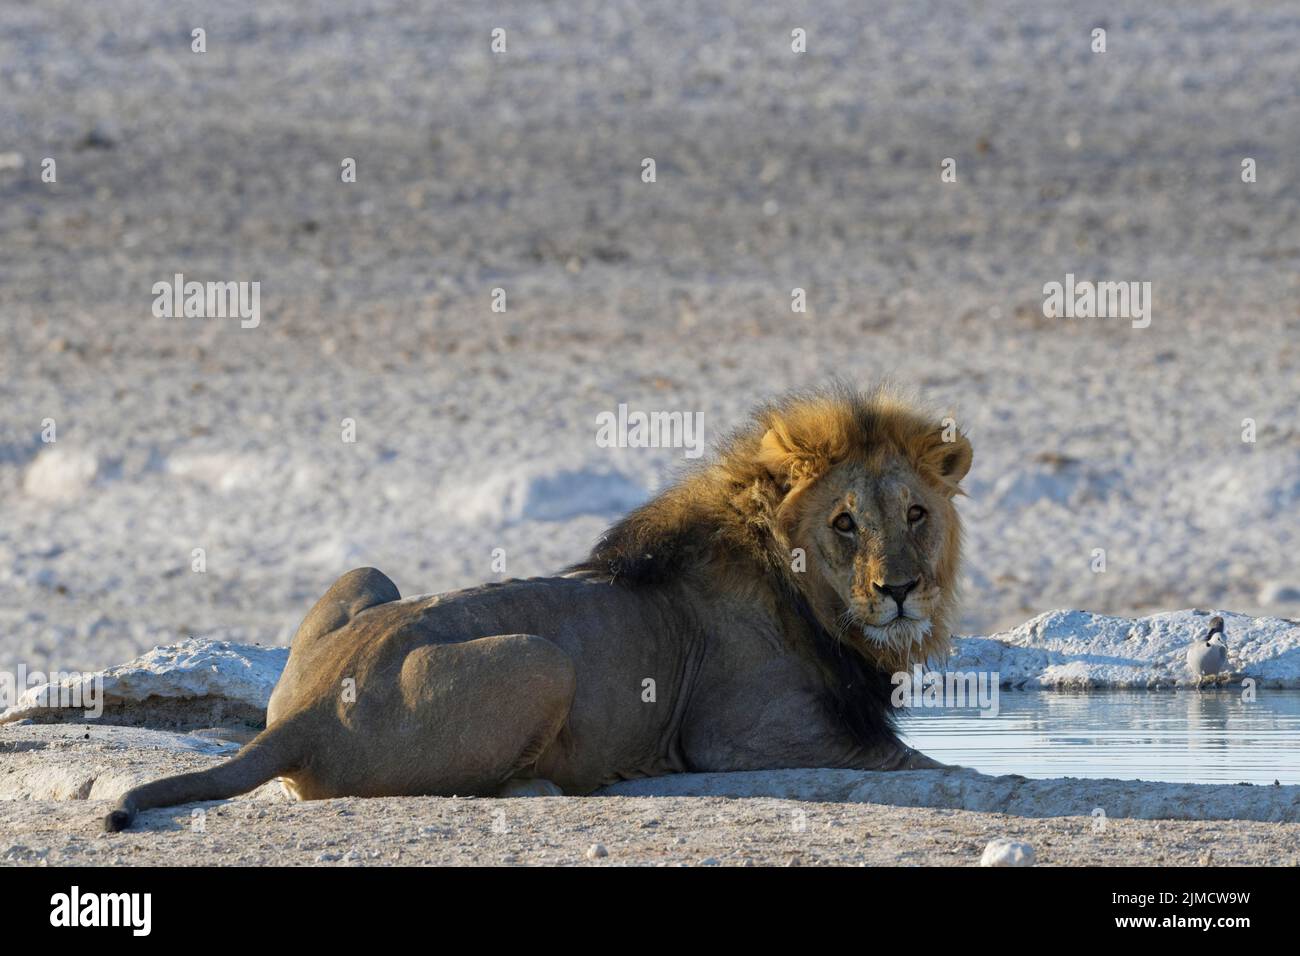 Leone africano (Panthera leo), menzogna maschio adulto, bere a waterhole, ALERT, Parco Nazionale Etosha, Namibia, Africa Foto Stock